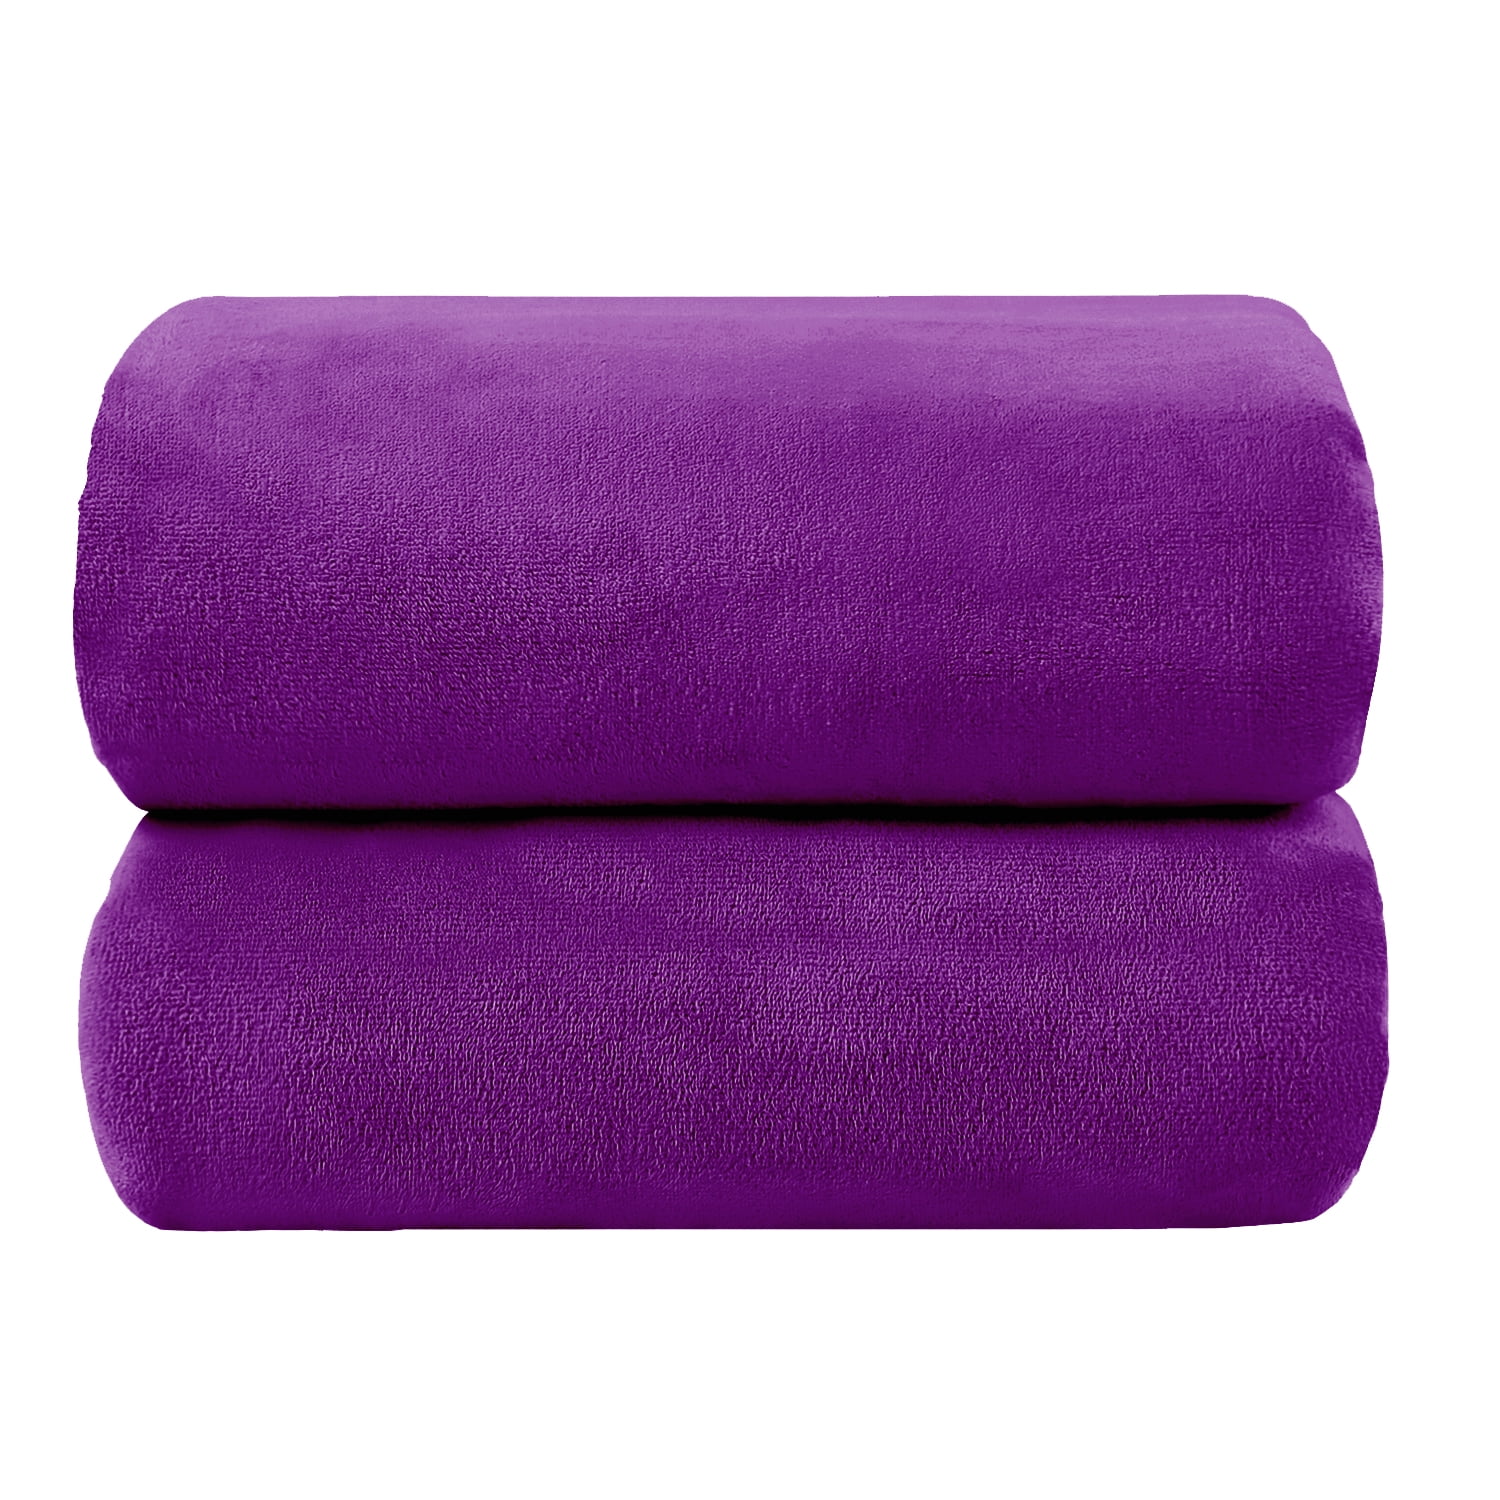 4 Piece Extra Large Bath Towel Set - 35x70 - Purple - Super Highly  Absorbent